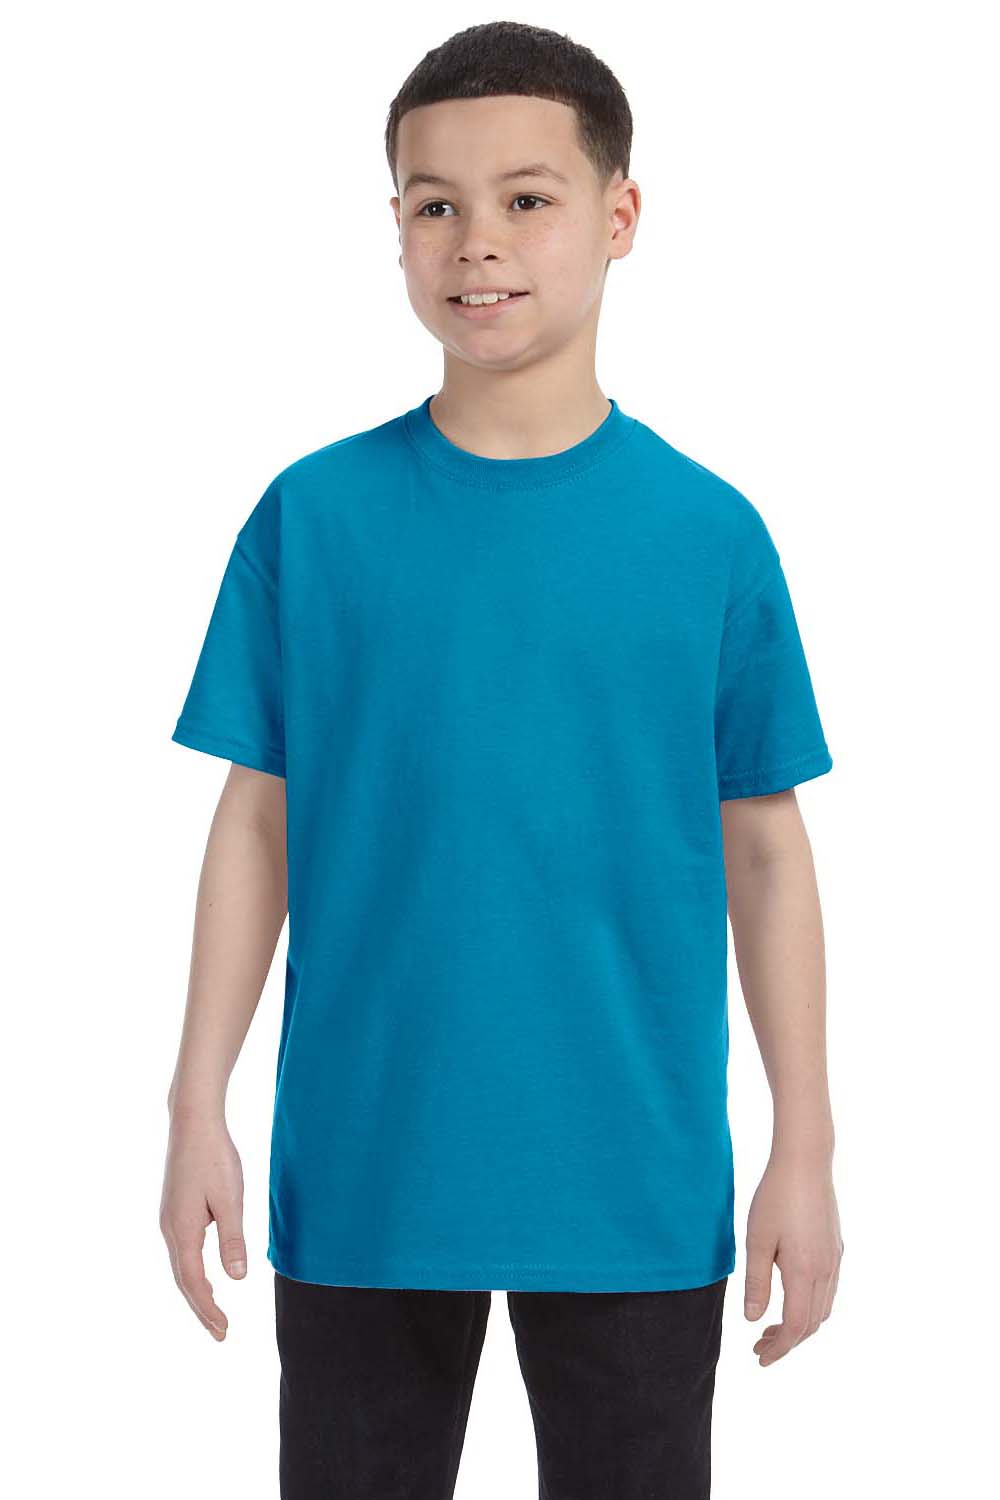 Hanes 54500 Youth ComfortSoft Short Sleeve Crewneck T-Shirt Teal Blue Front